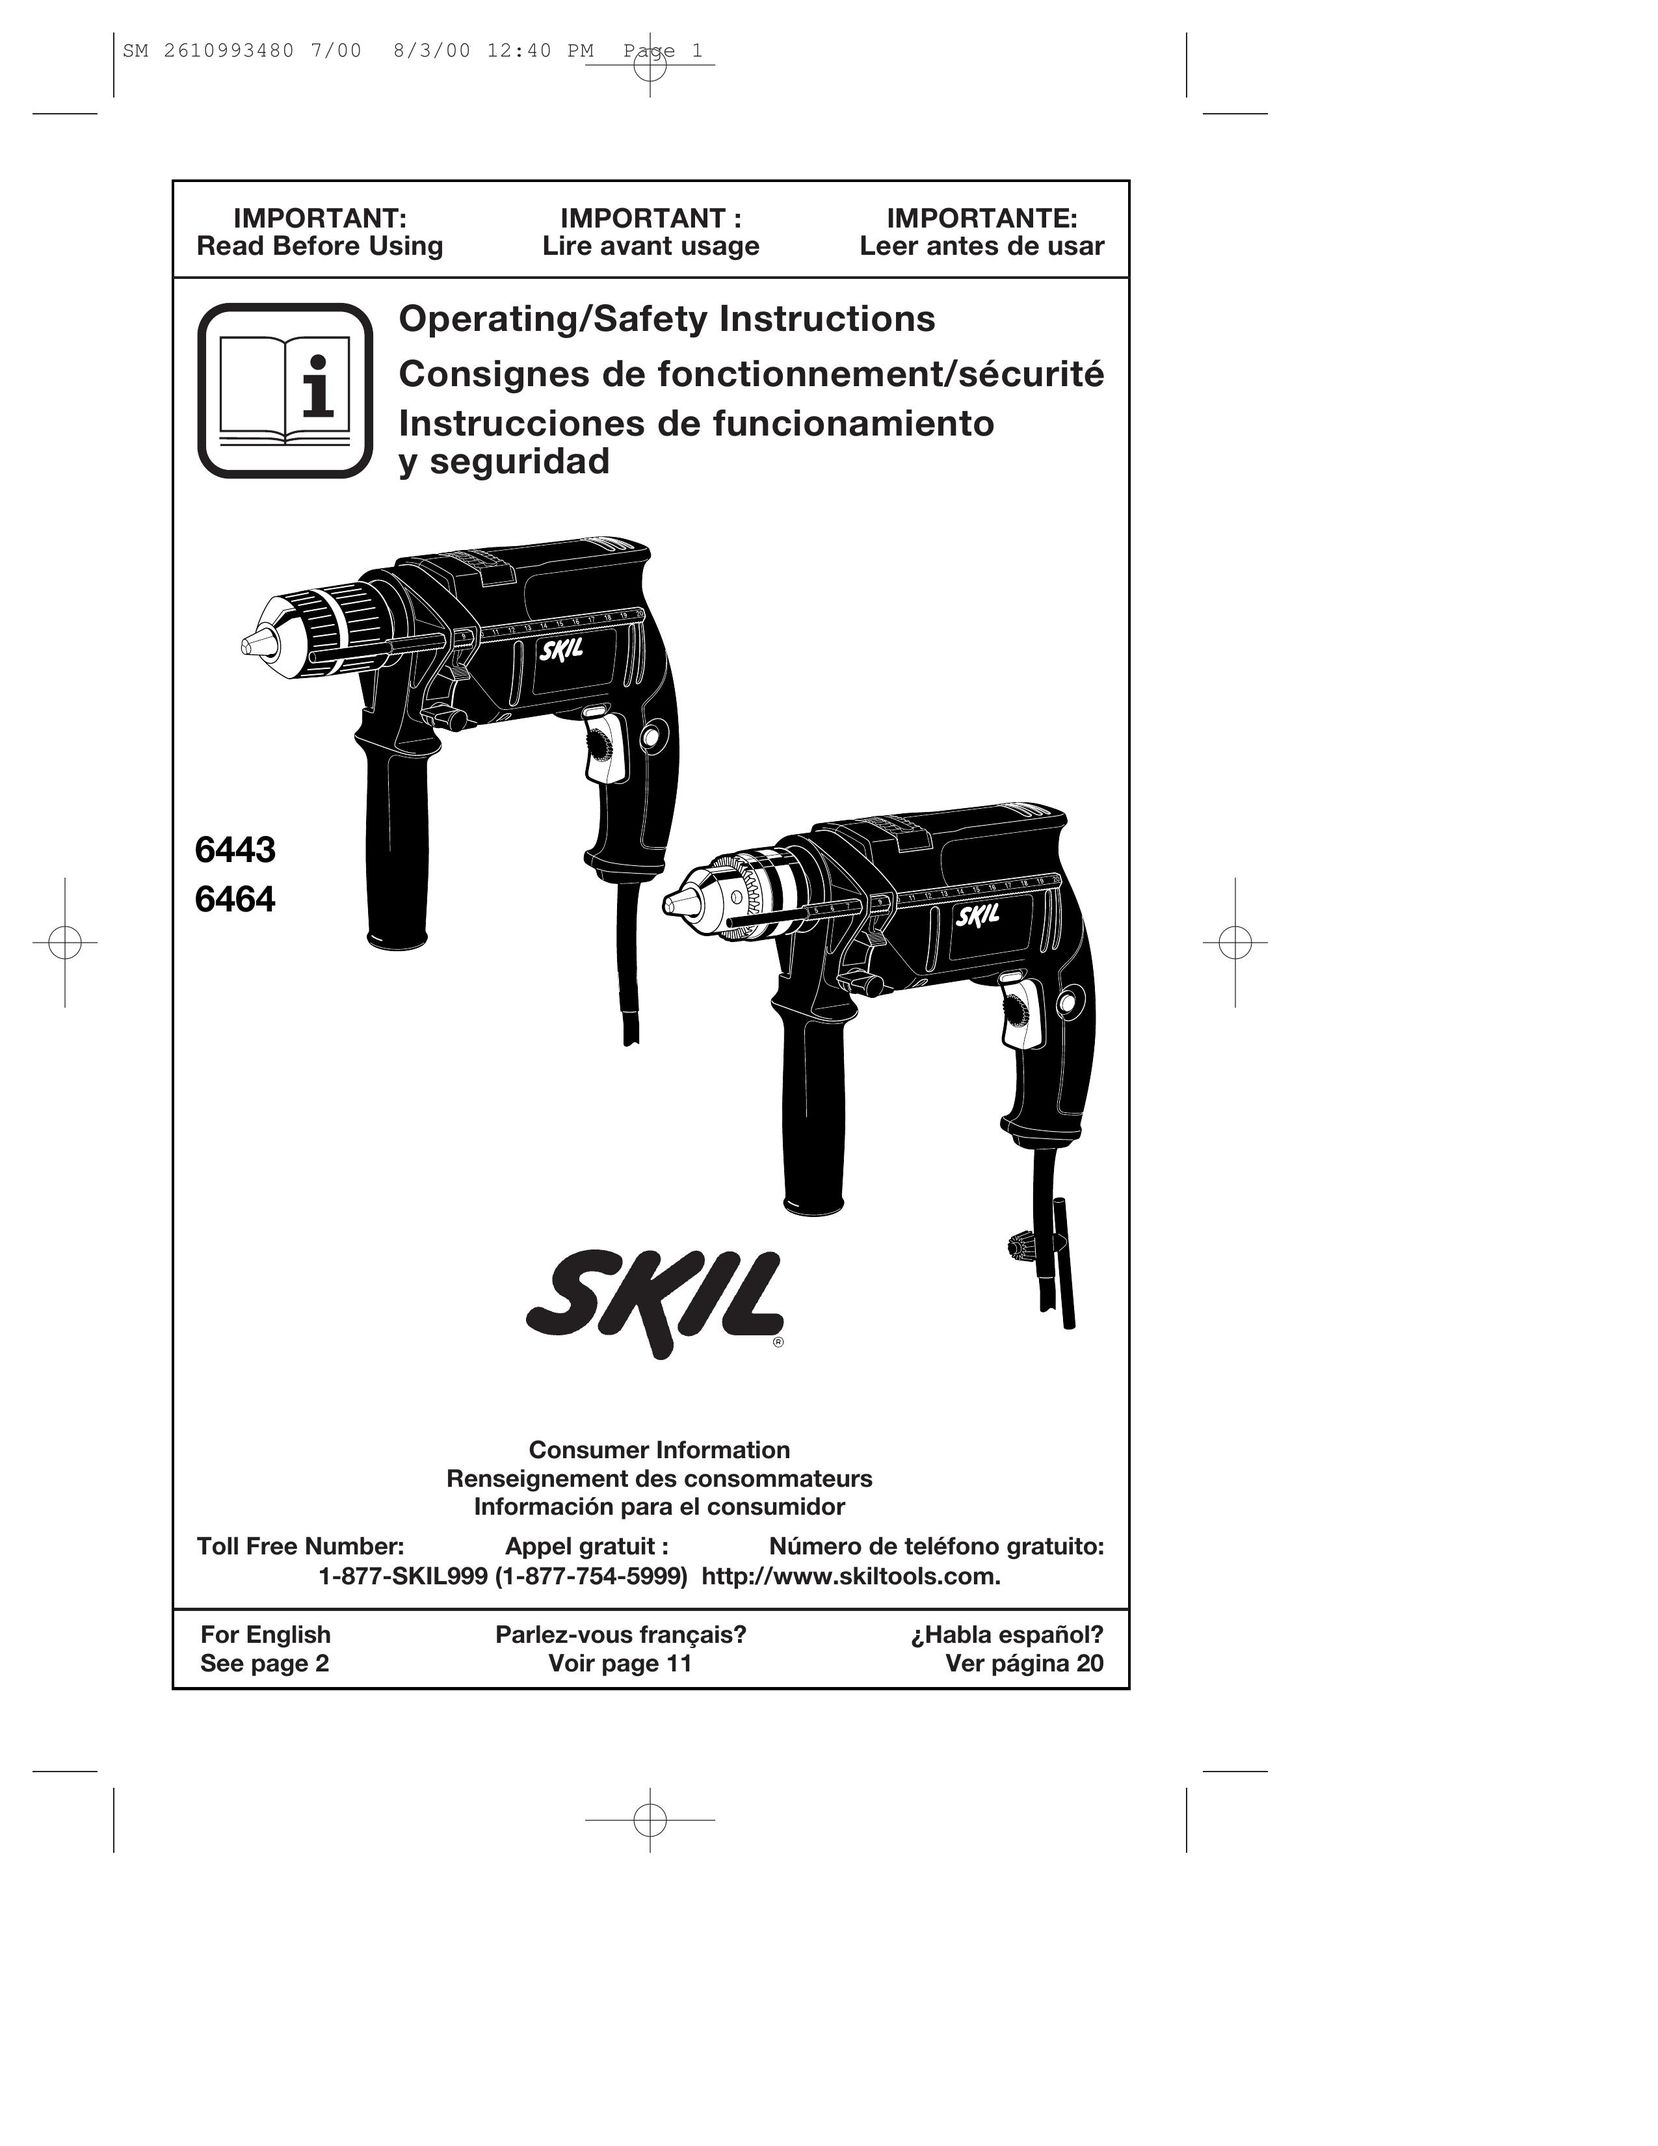 Skil 6464 Drill User Manual